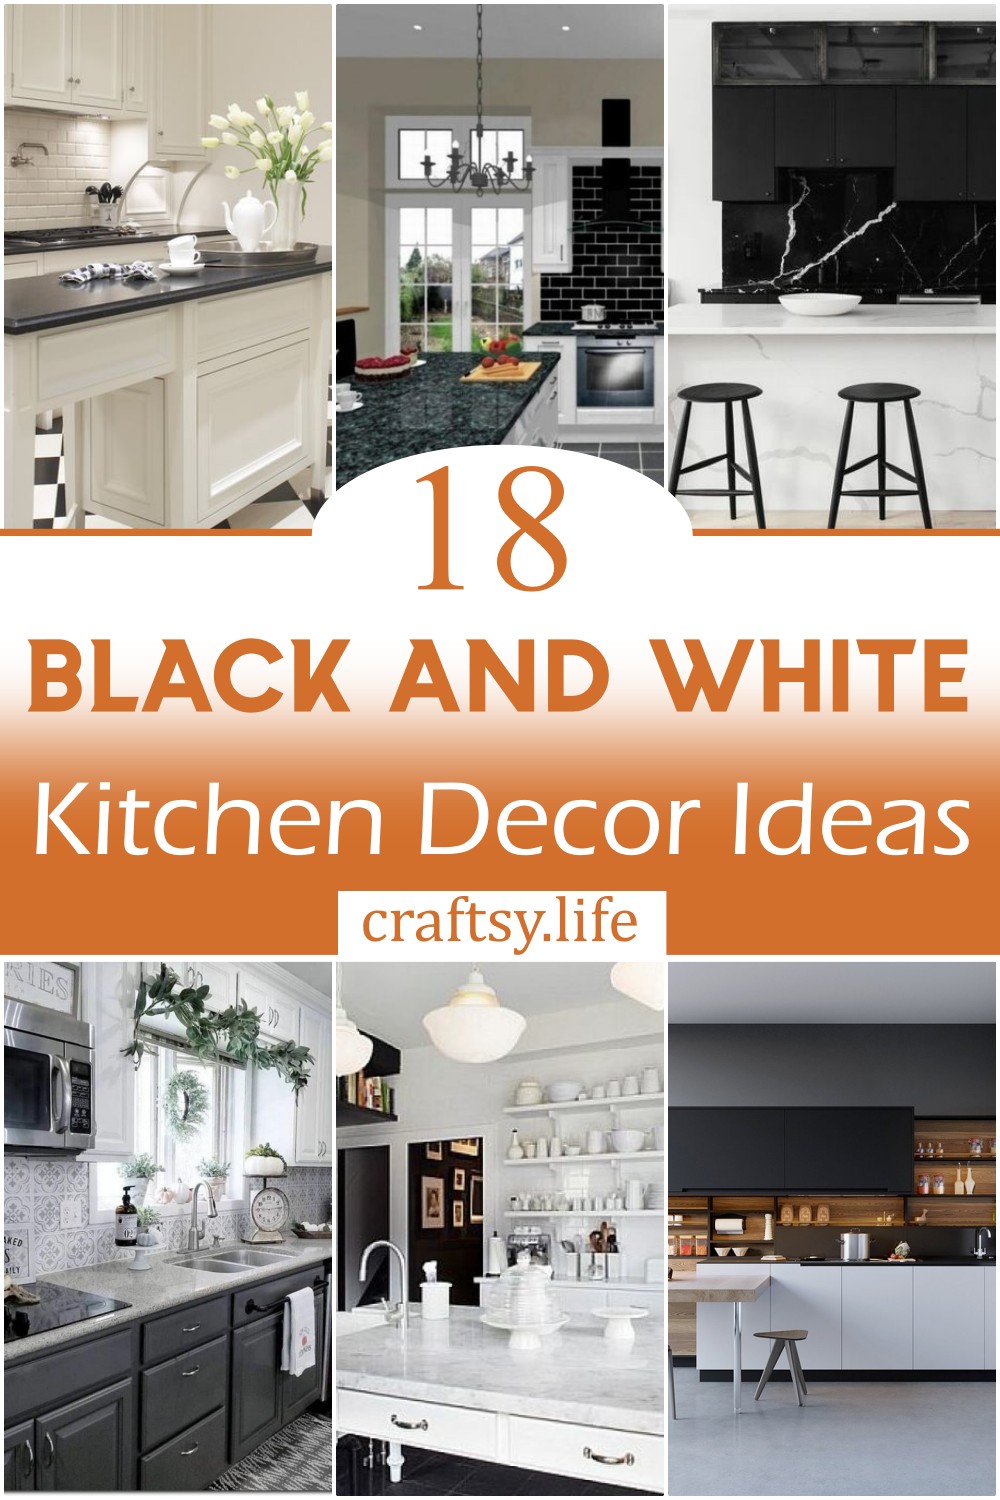 Black and White Kitchen Decor Ideas 1